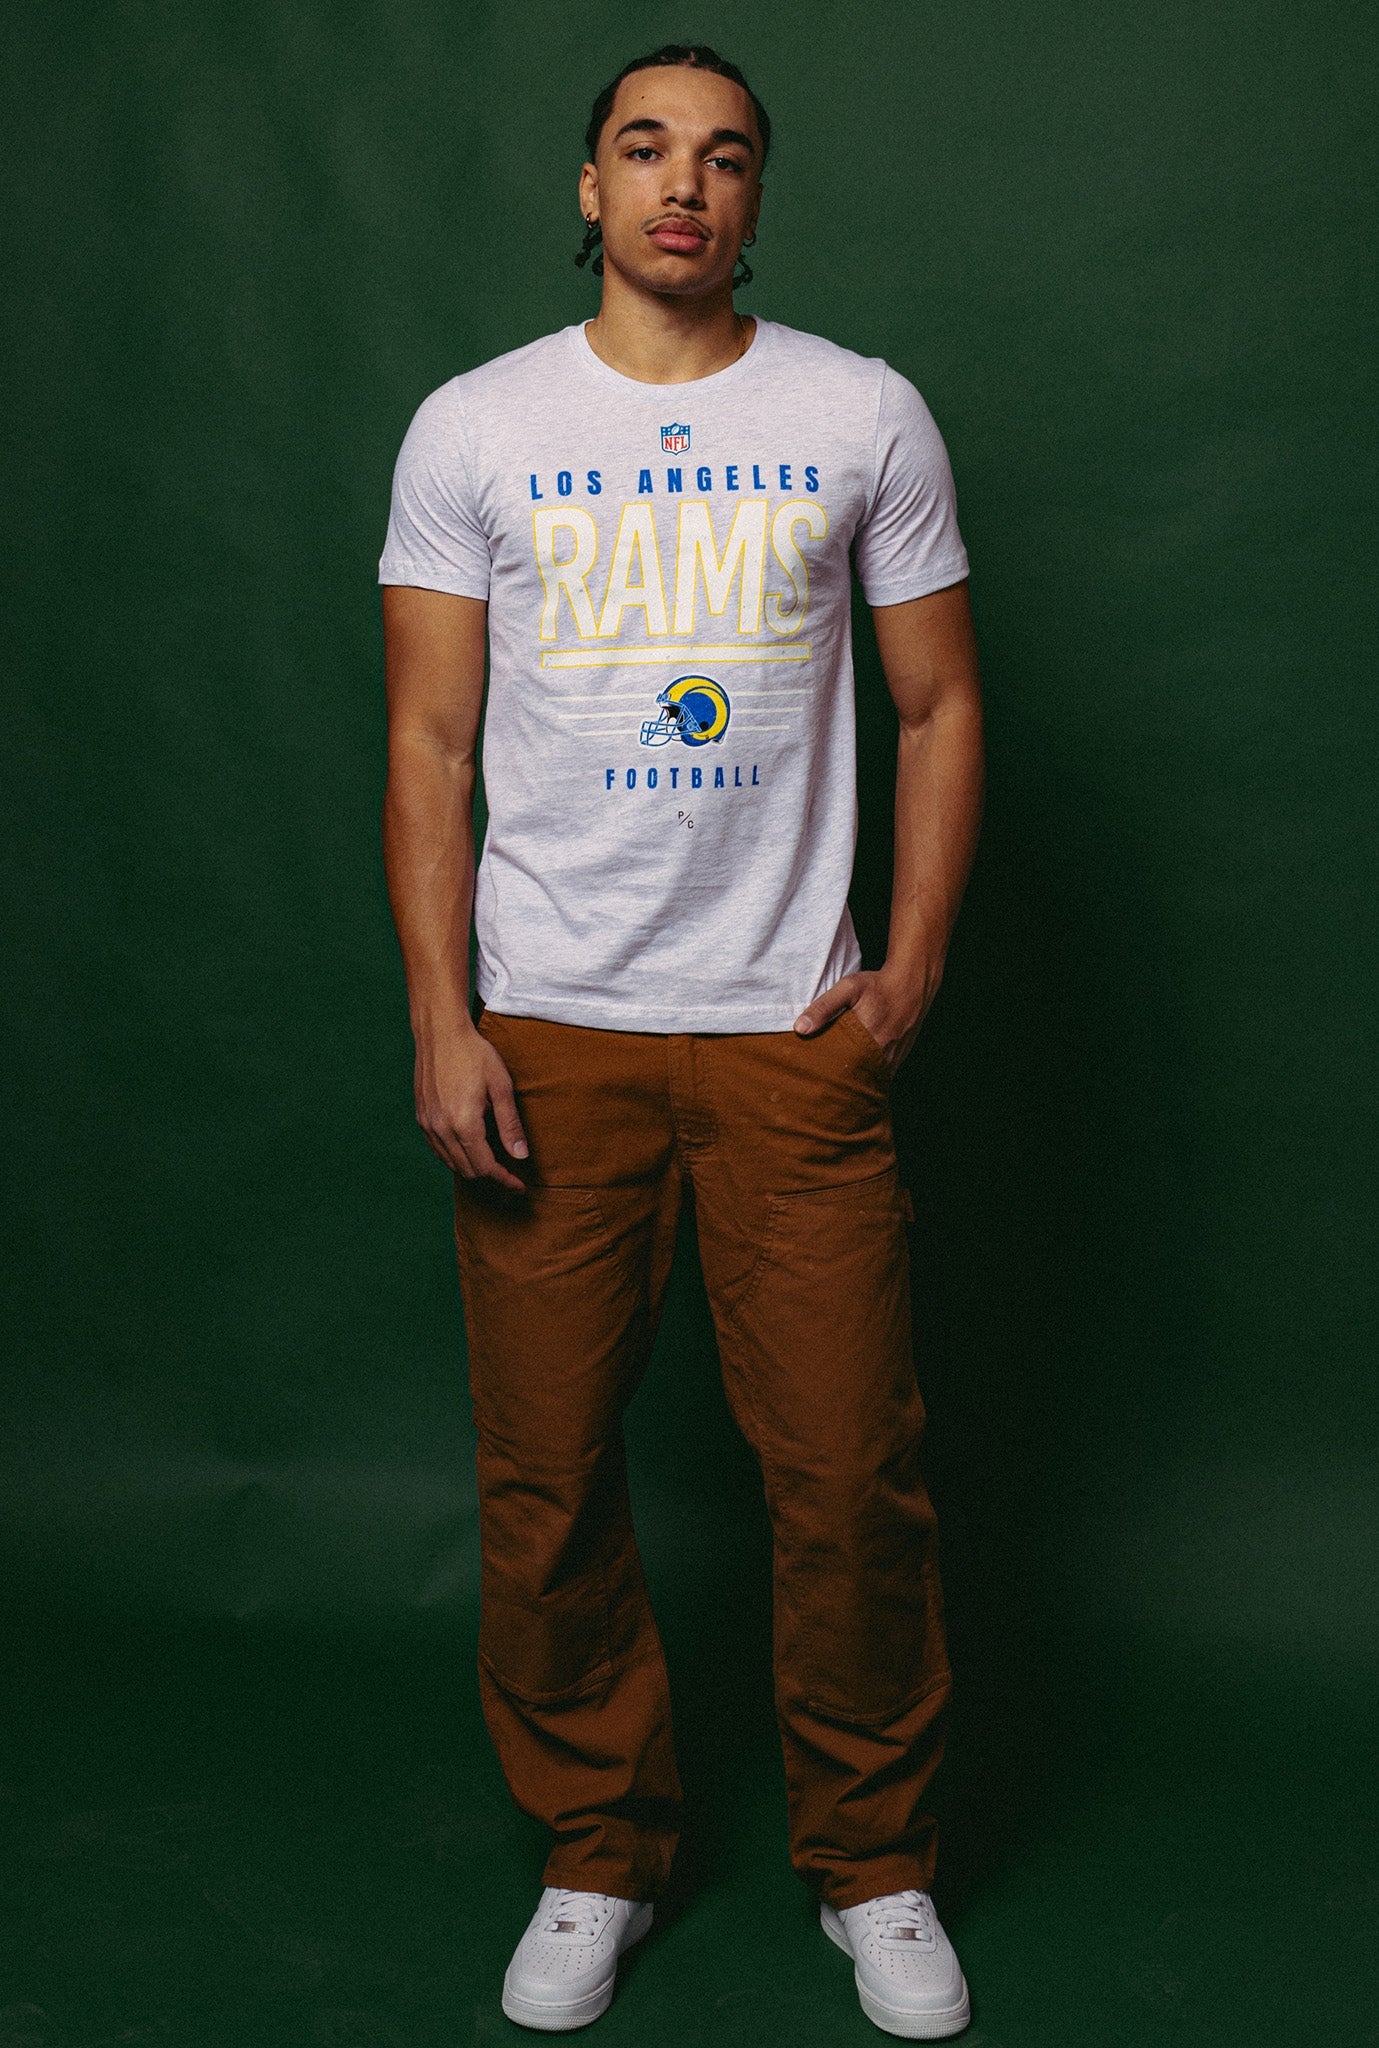 Los Angeles Rams Vintage T-Shirt - Ash